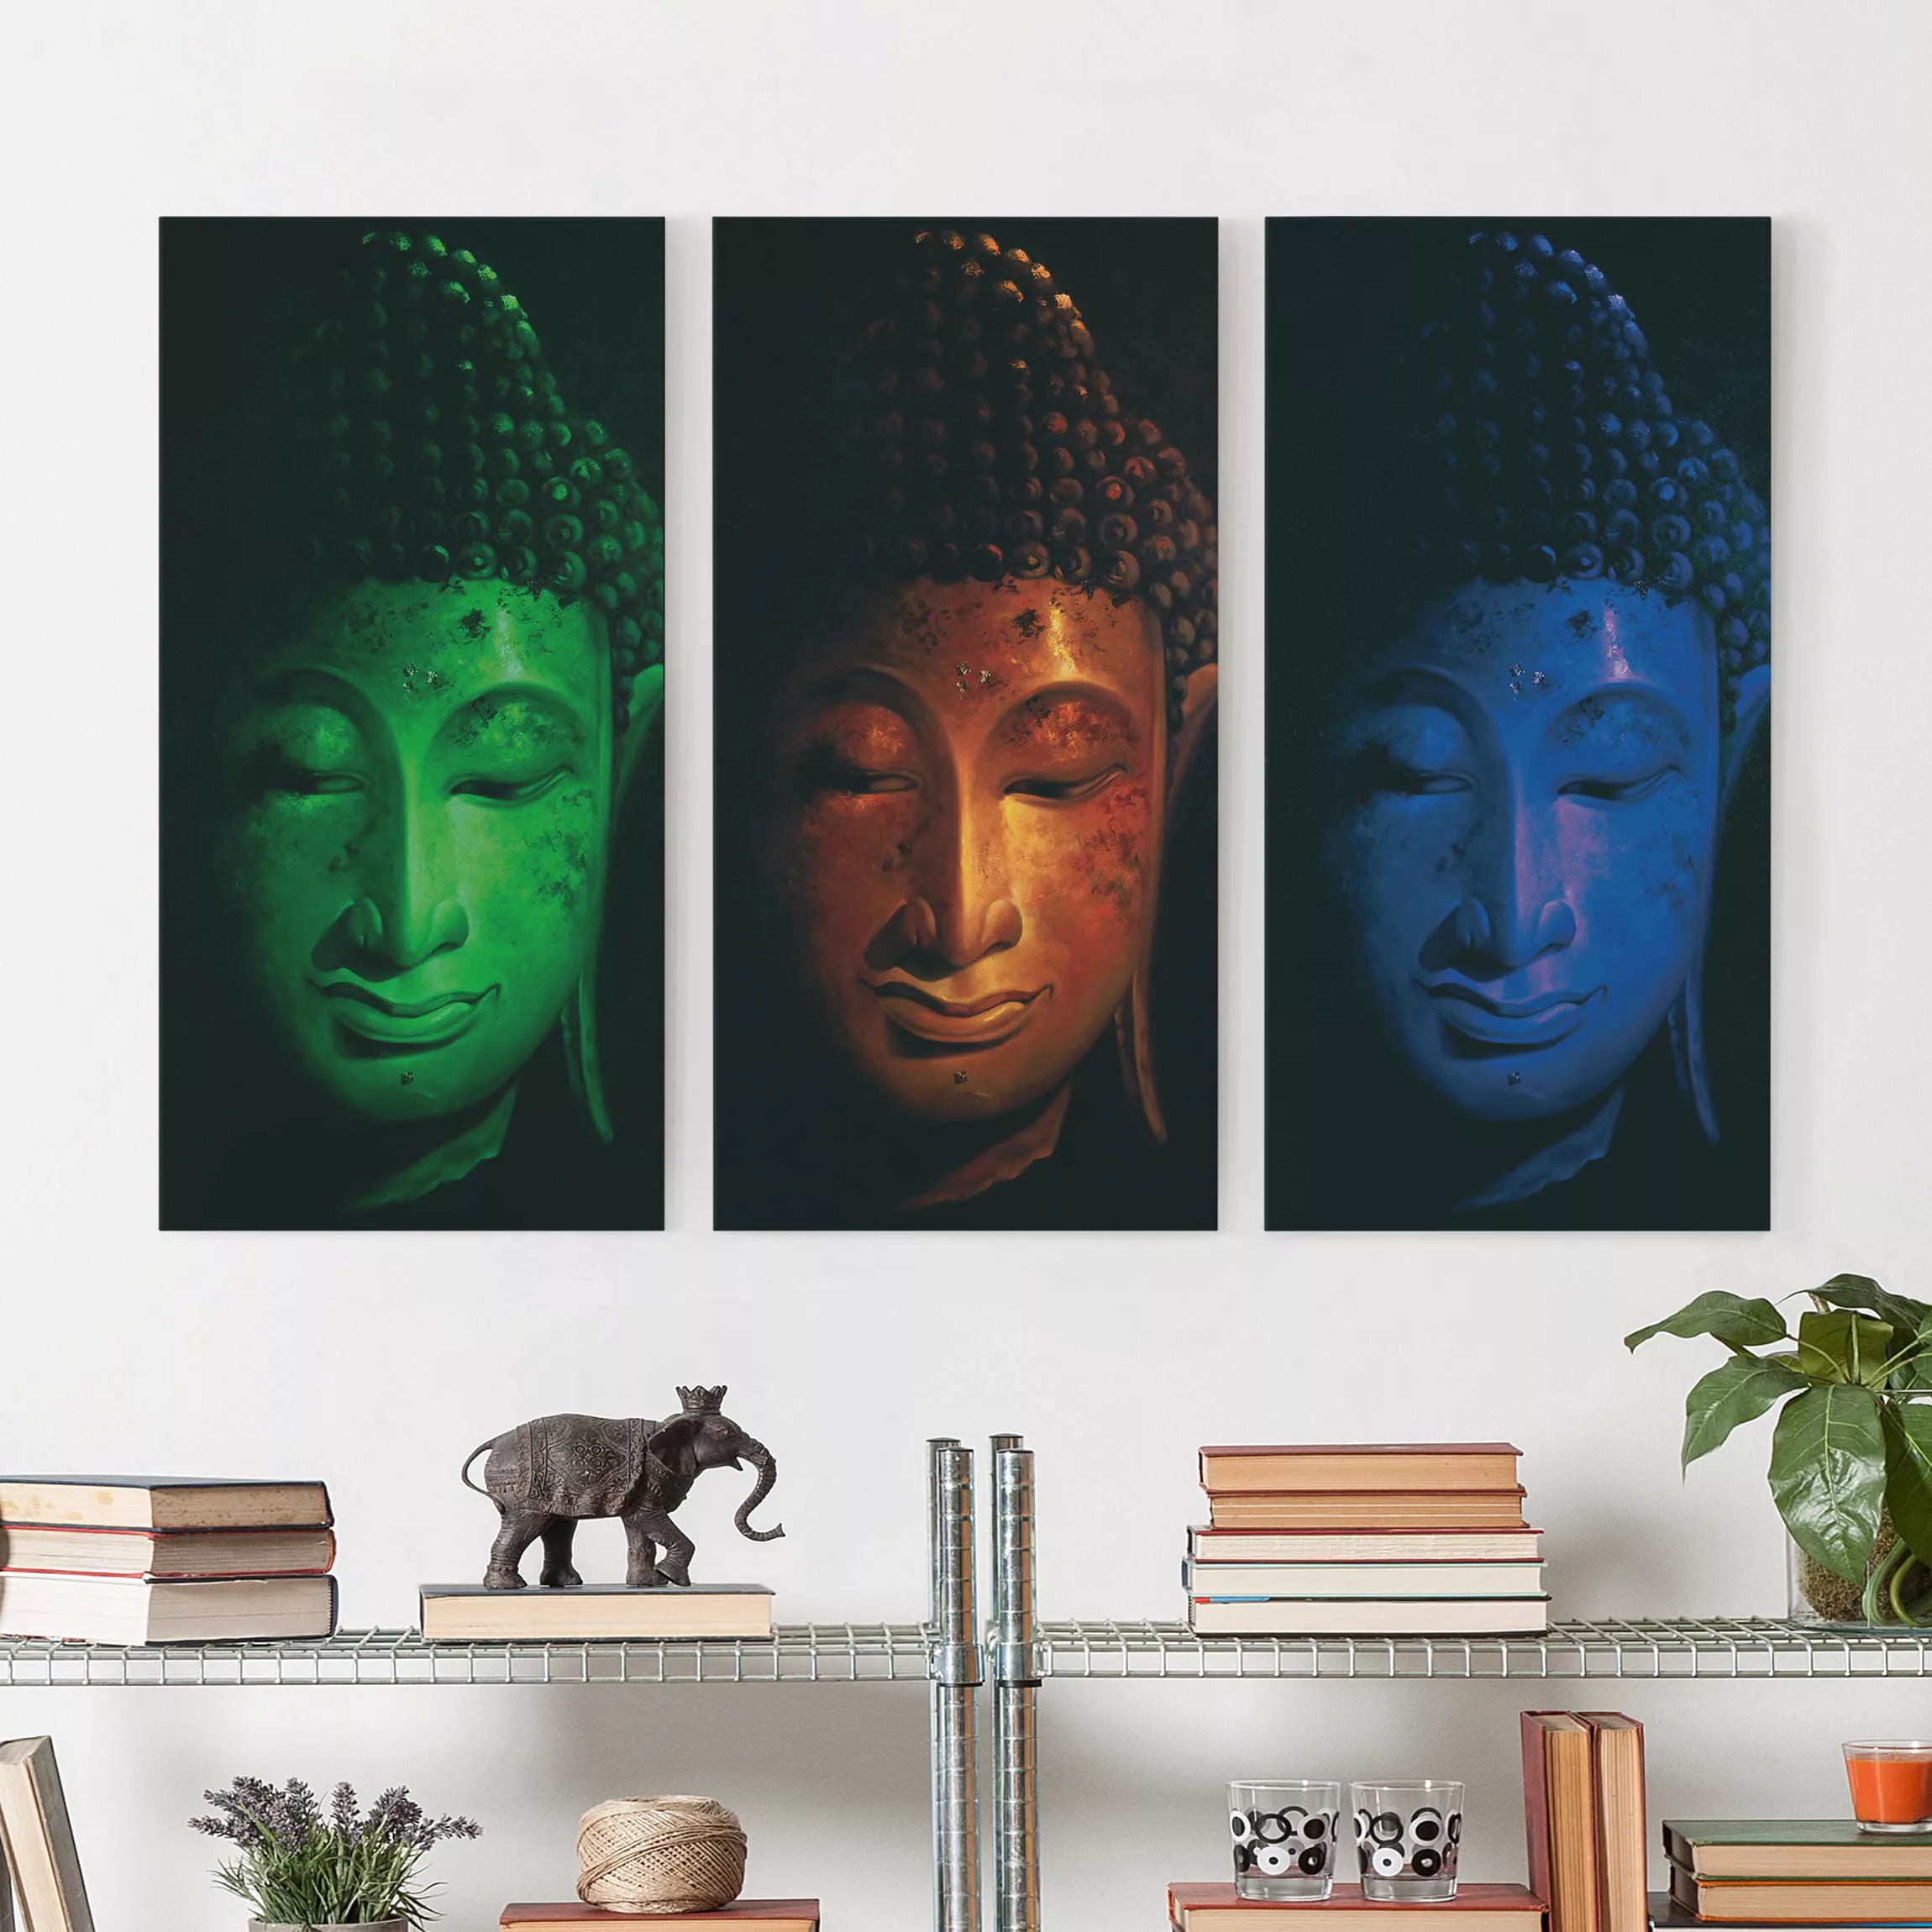 3-teiliges Leinwandbild Buddha - Hochformat Triple Buddha günstig online kaufen